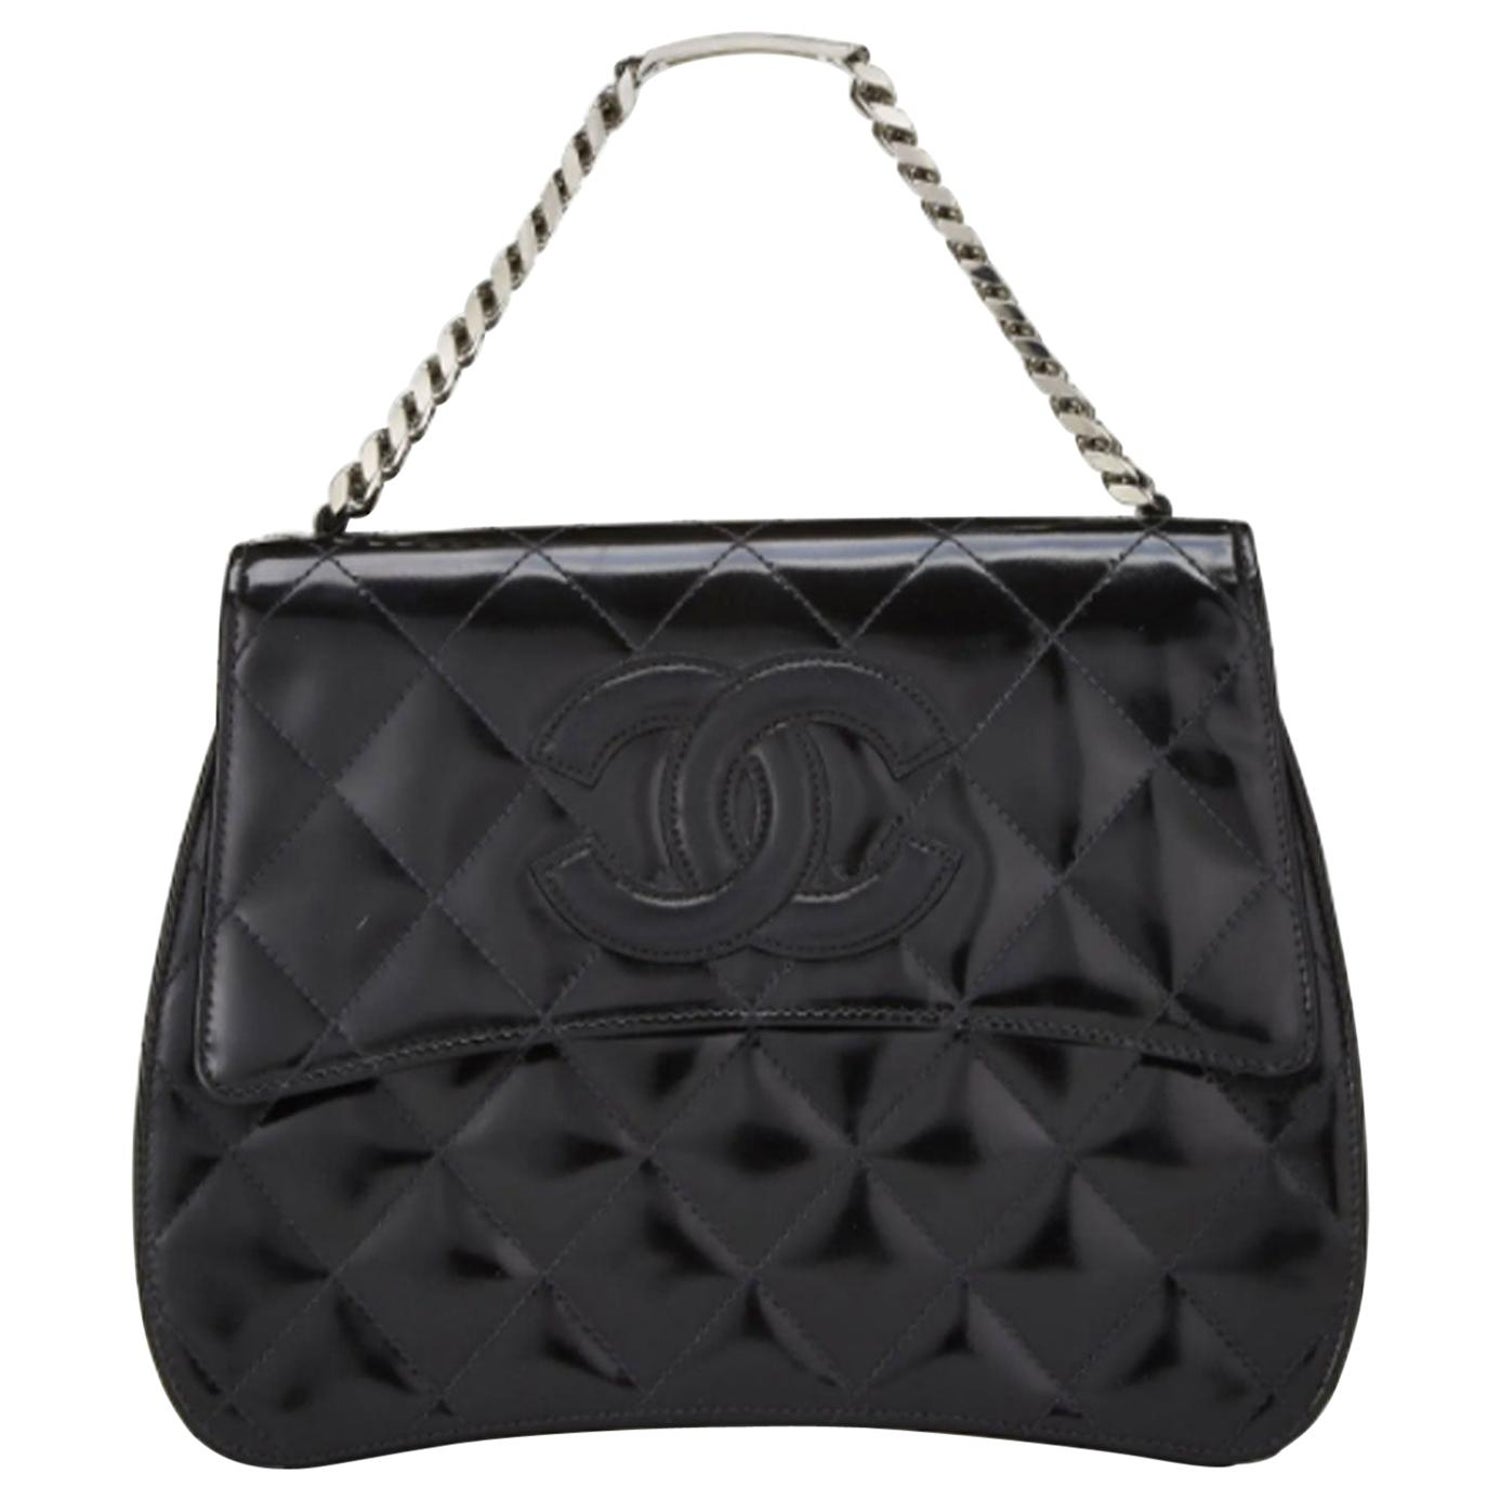 CHANEL Wood Handle Handbag in Black Caviar - More Than You Can Imagine